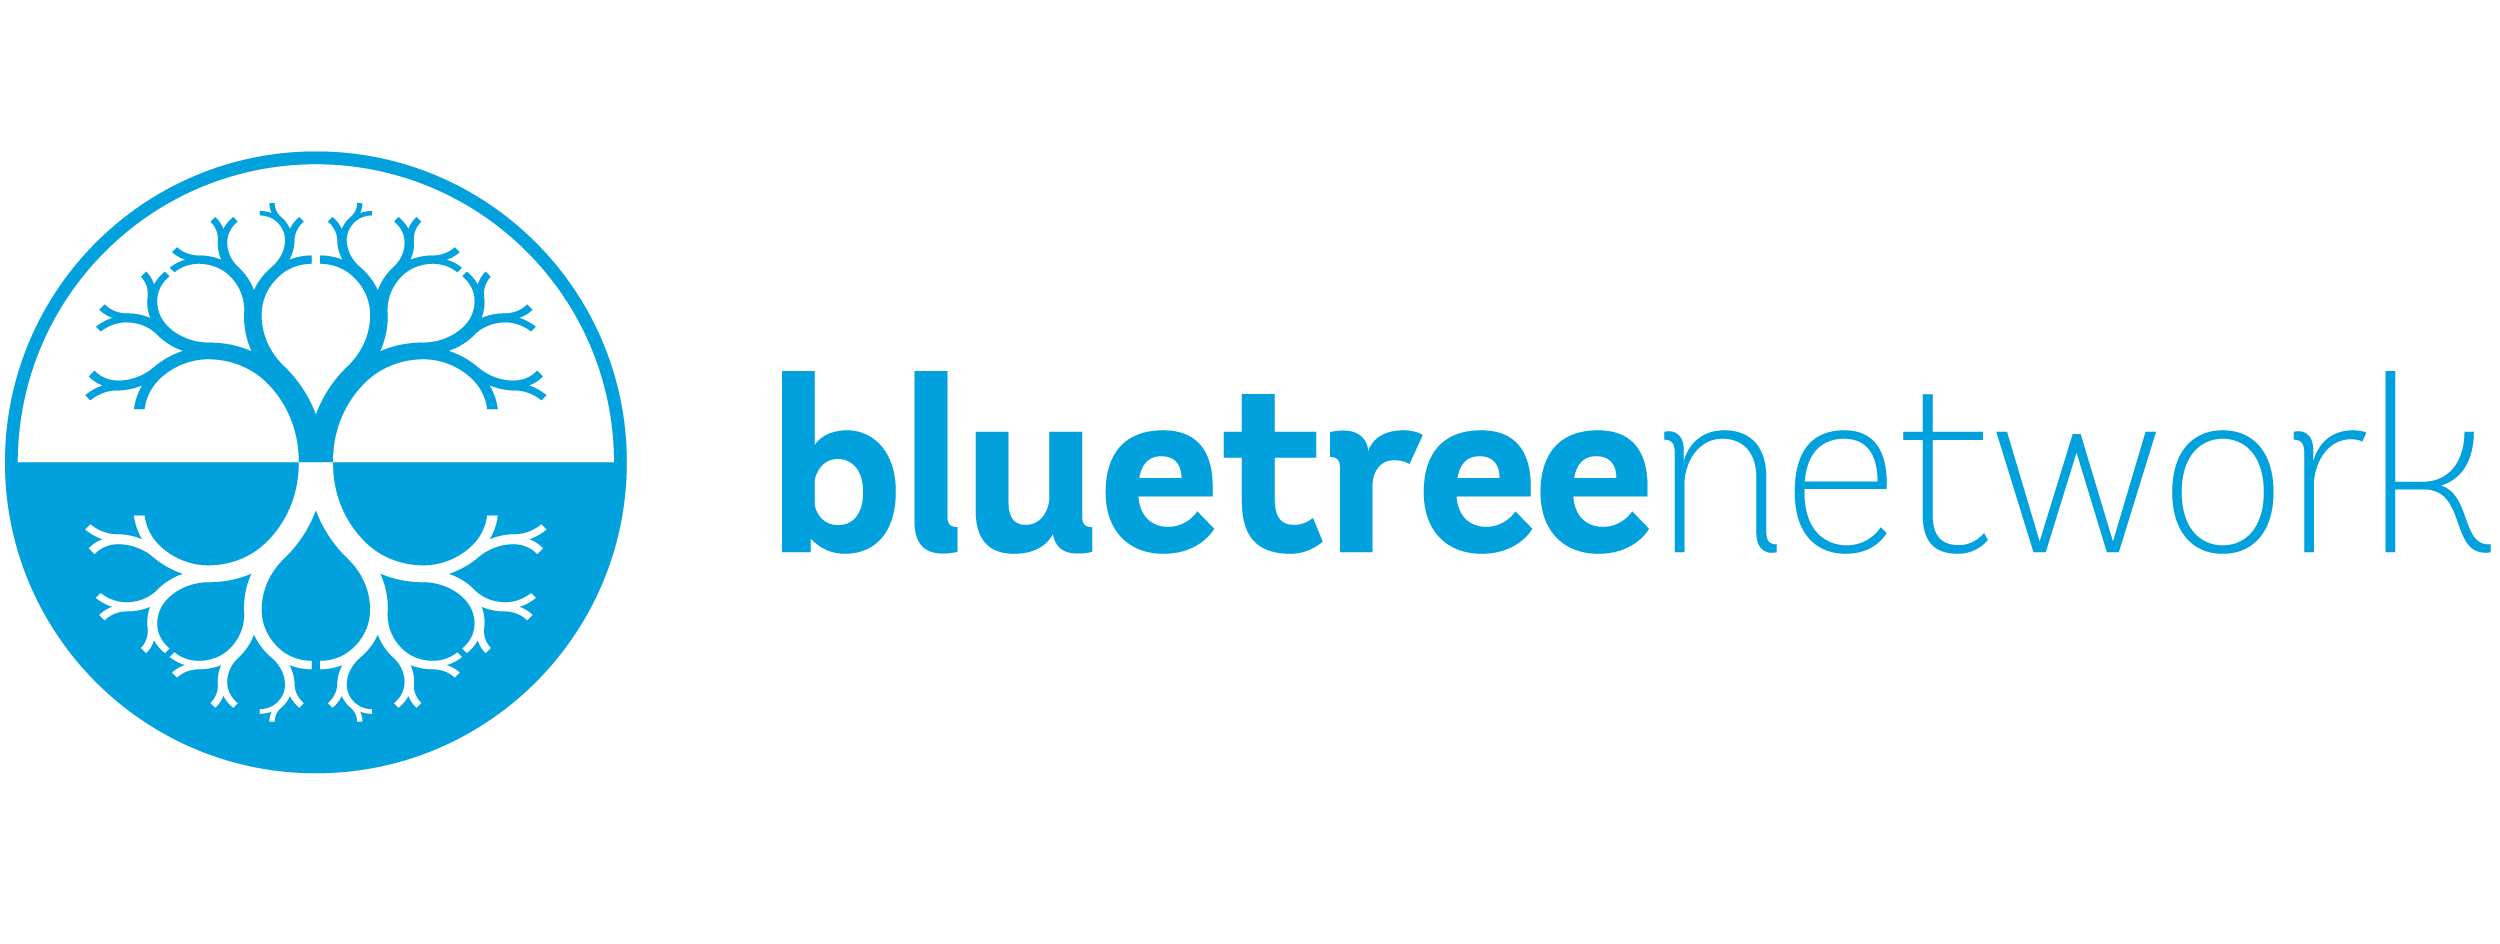 Blue Tree Logo - BlueTree Network Identity, Website & Web Application Design | 38one ...